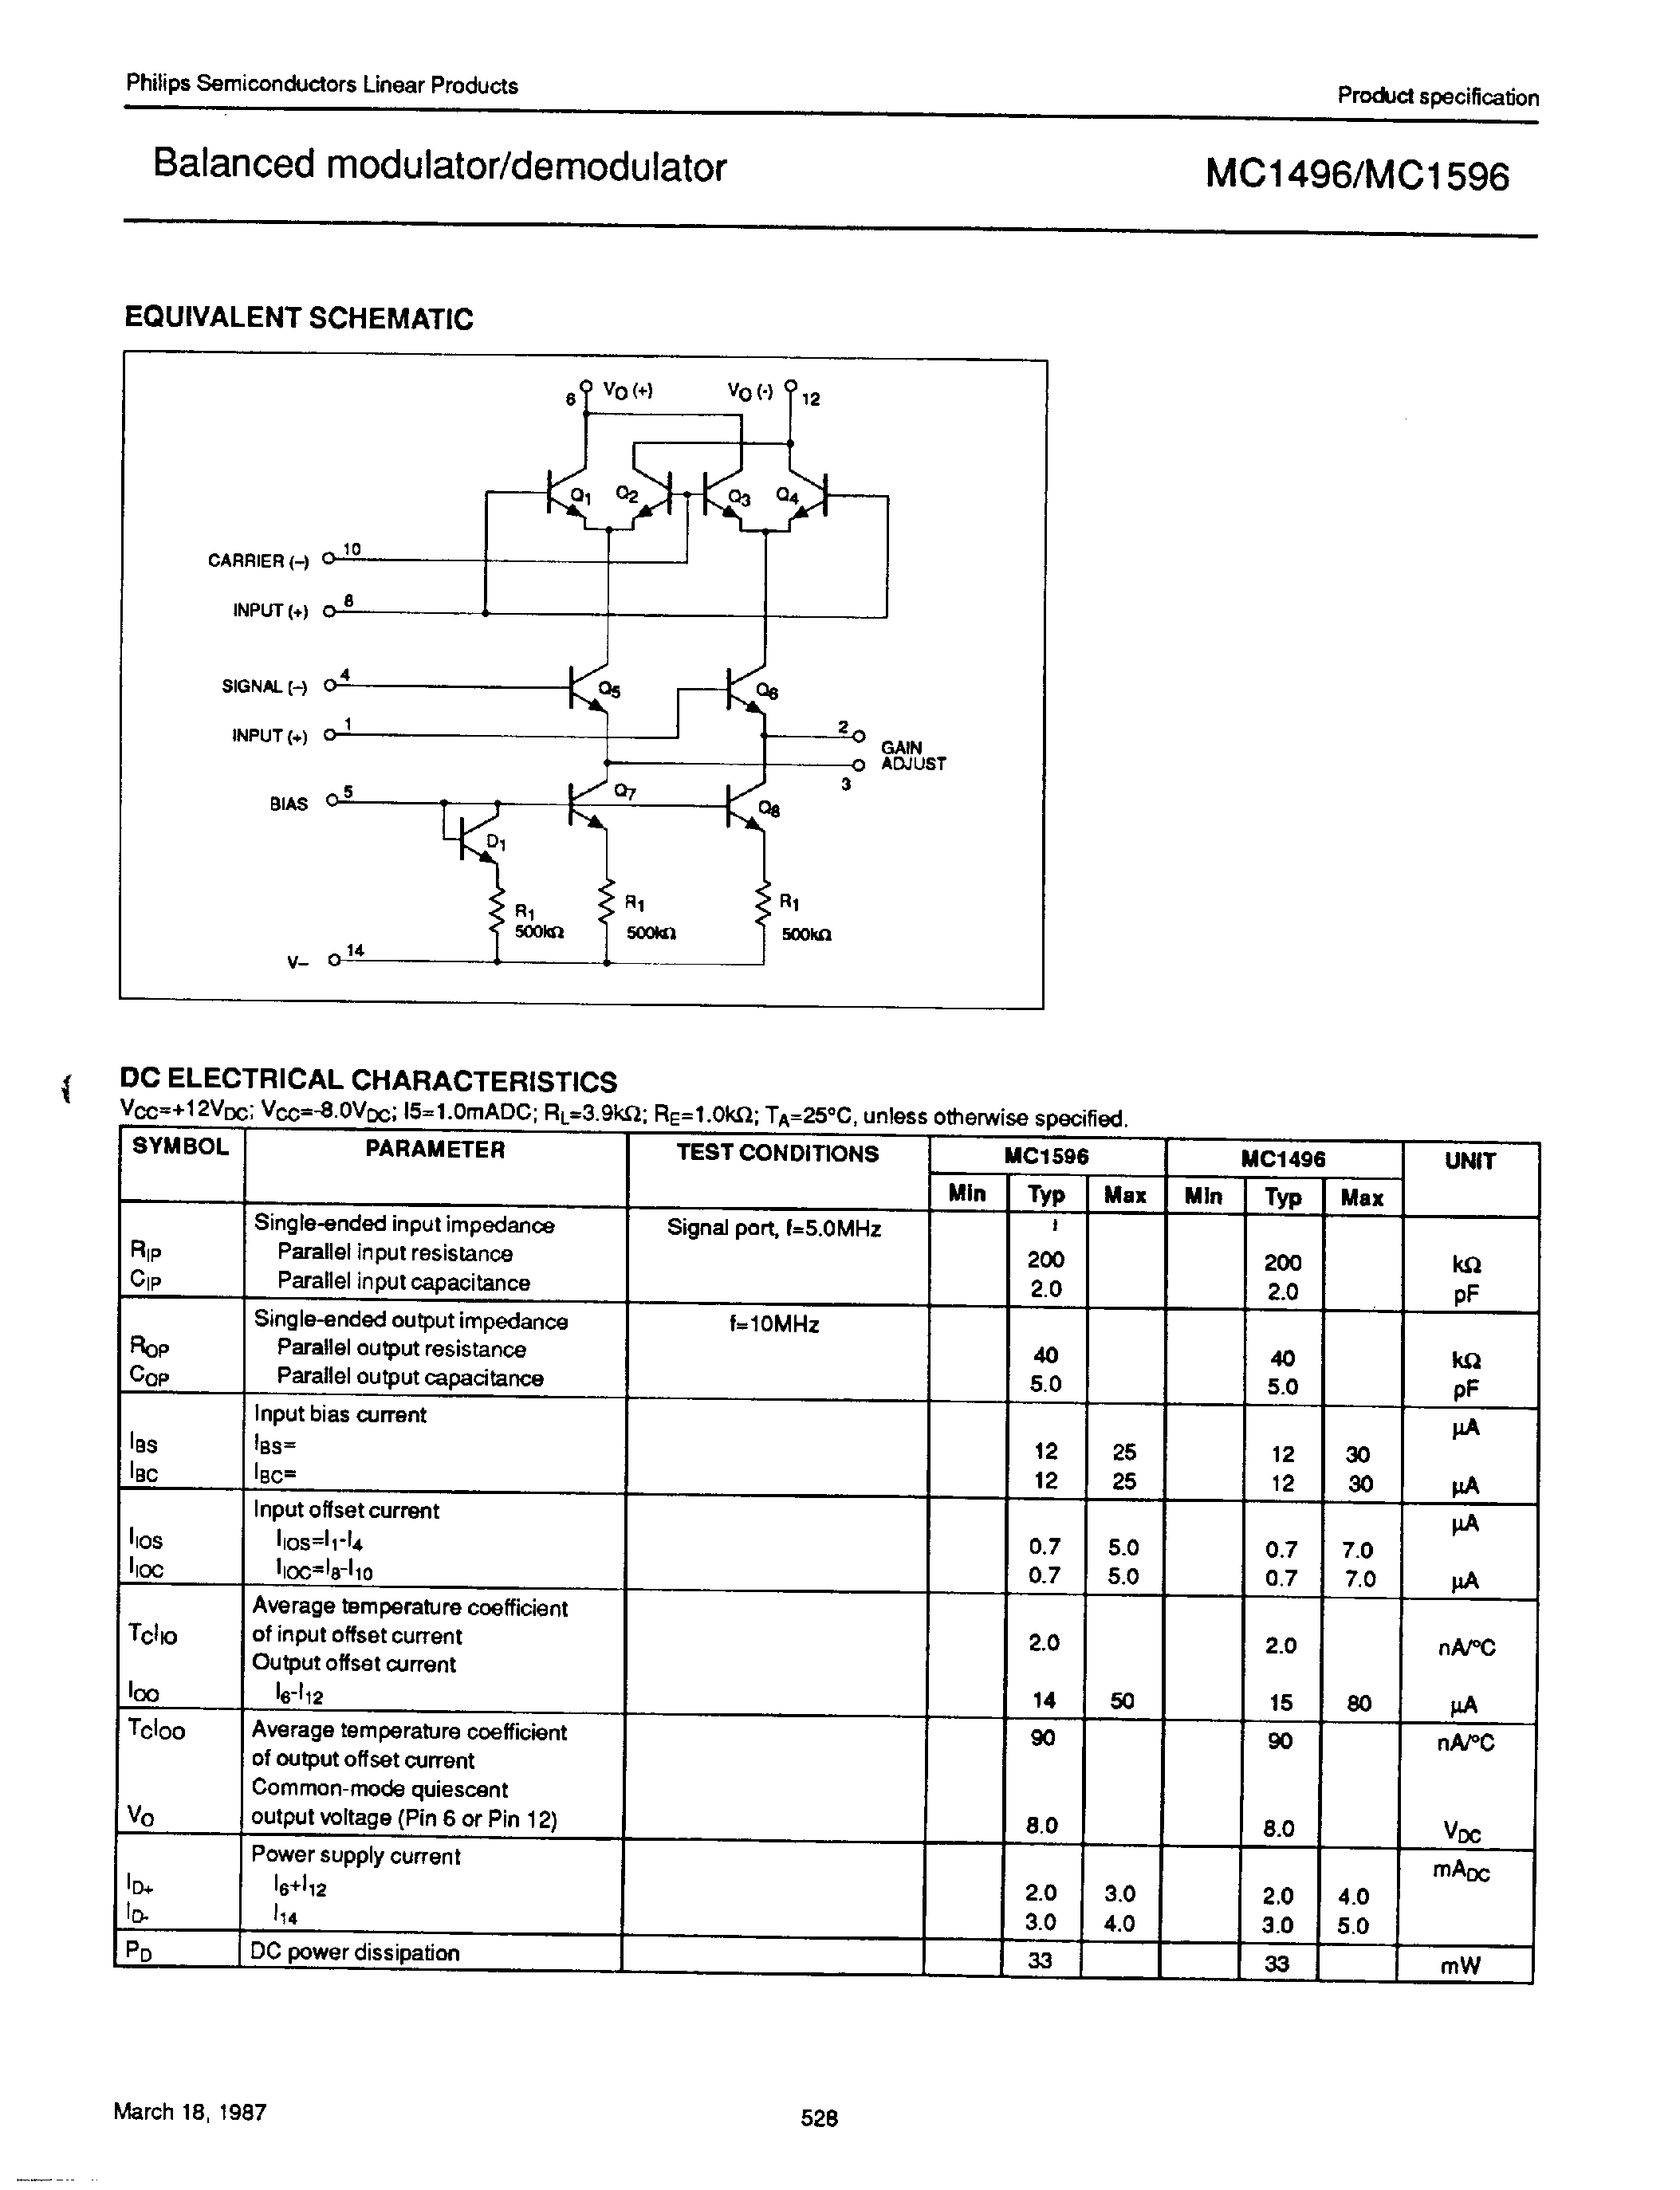 Datasheet MC1496 - (MC1496 / MC1596) Balanced mudulator/demodulator page 2